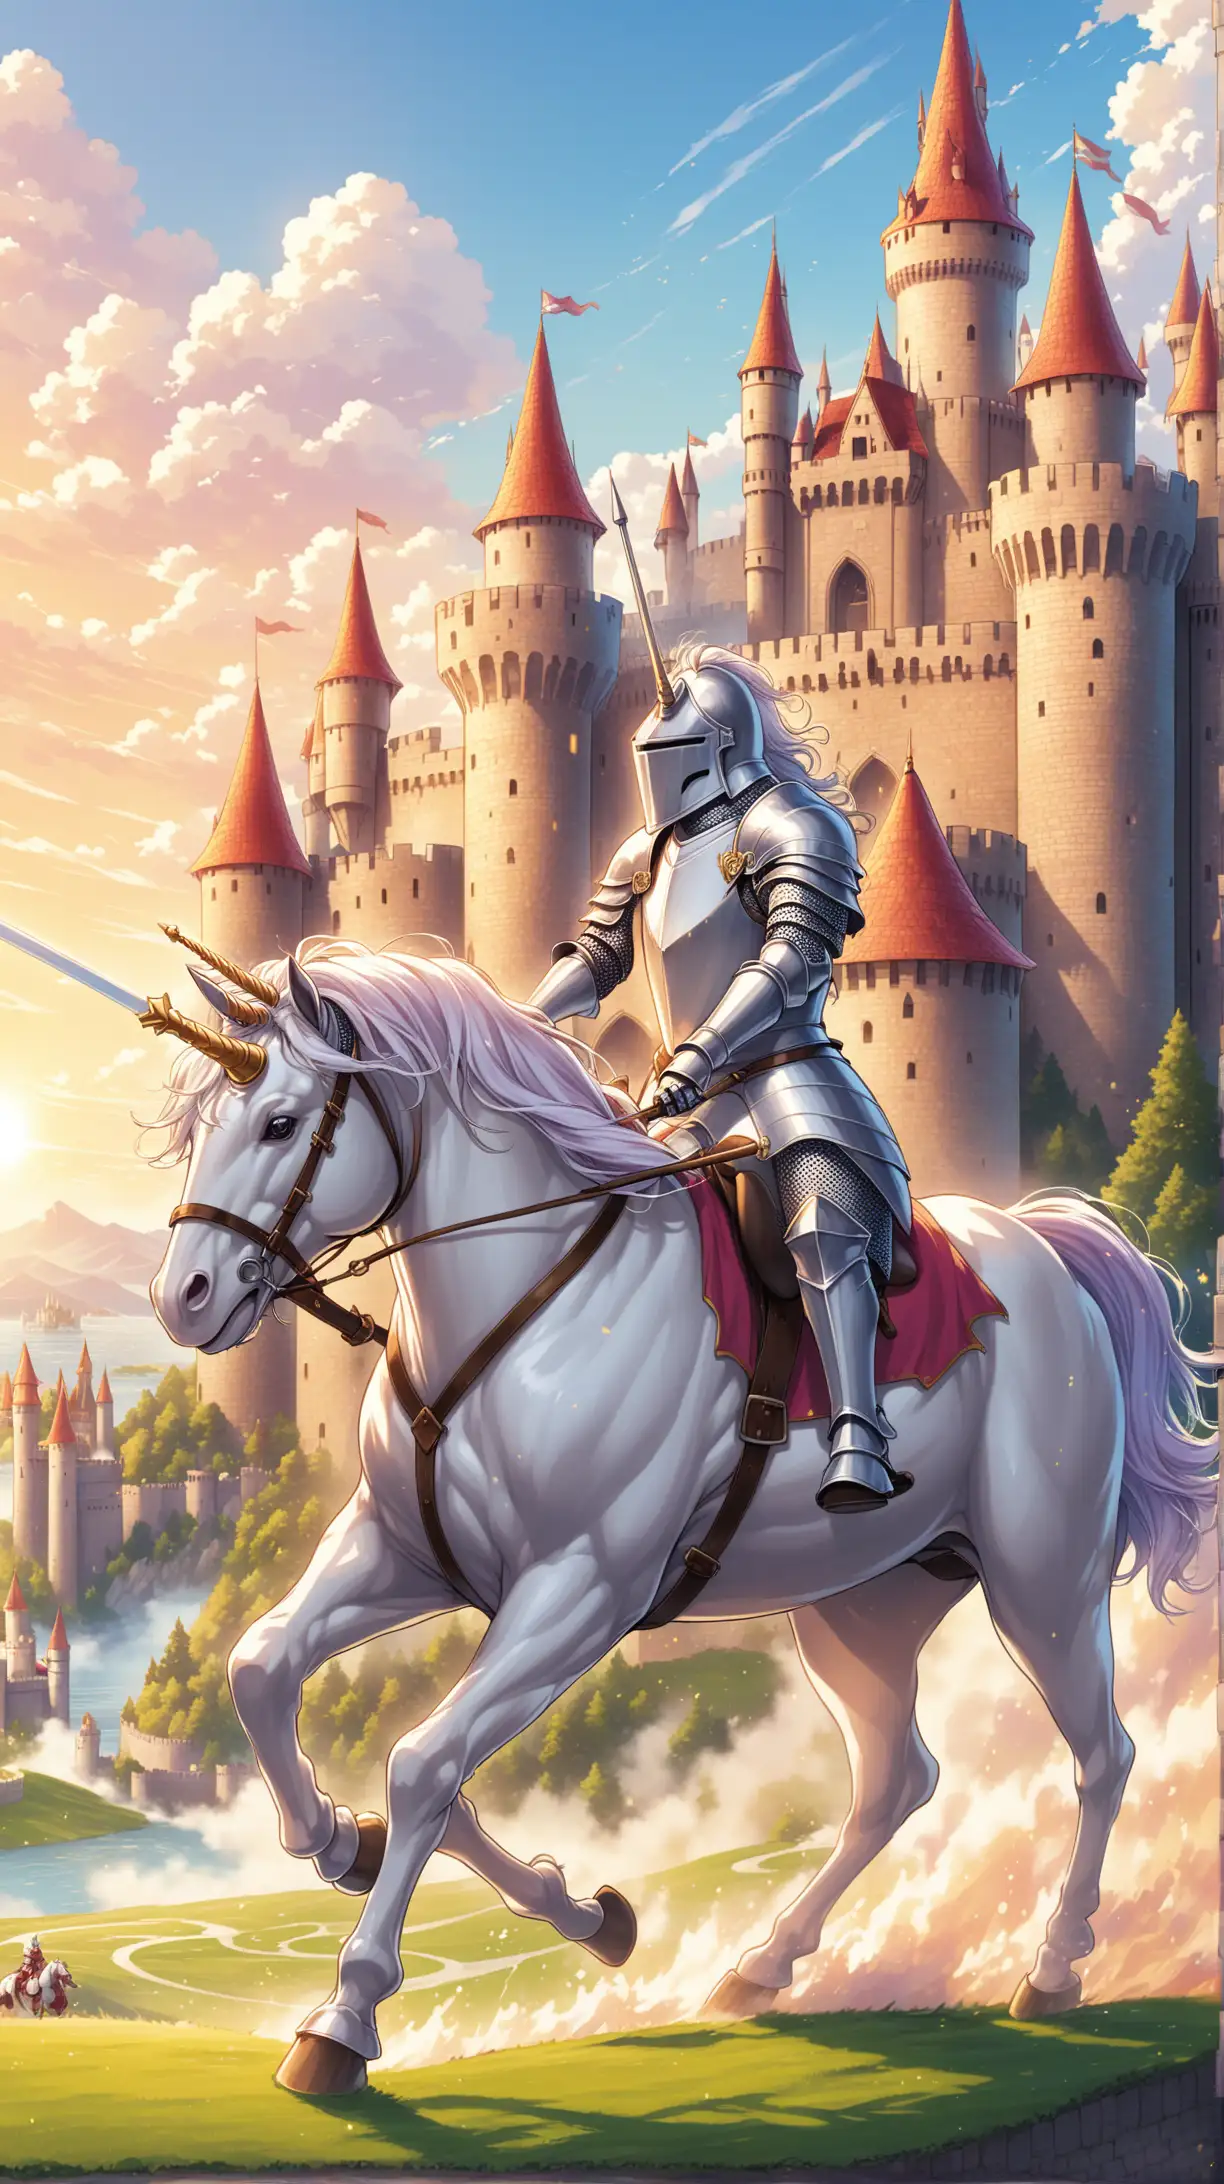 knight defending a castle riding a unicorn